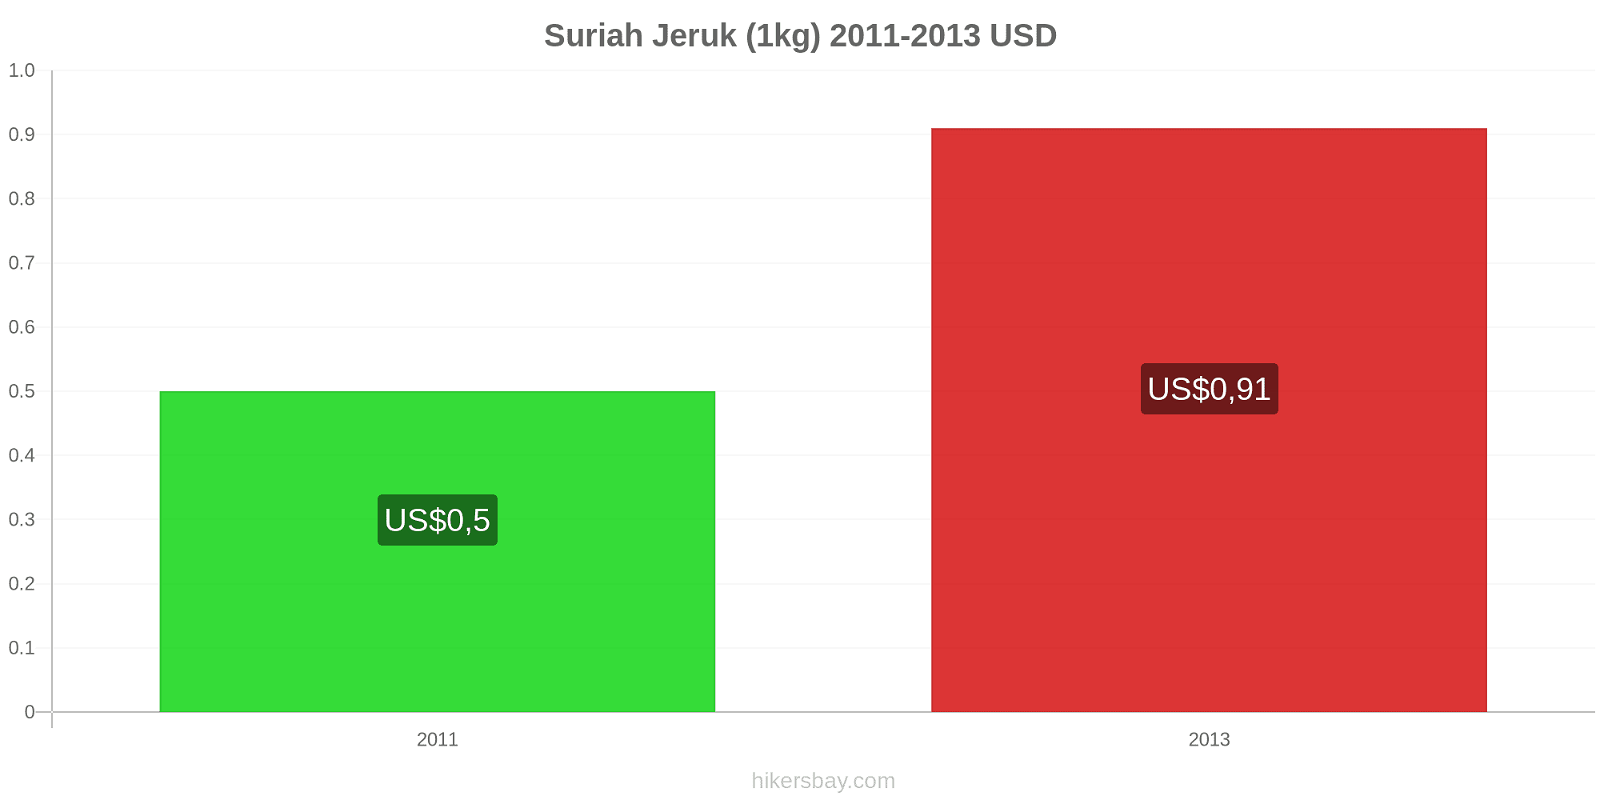 Suriah perubahan harga Jeruk (1kg) hikersbay.com